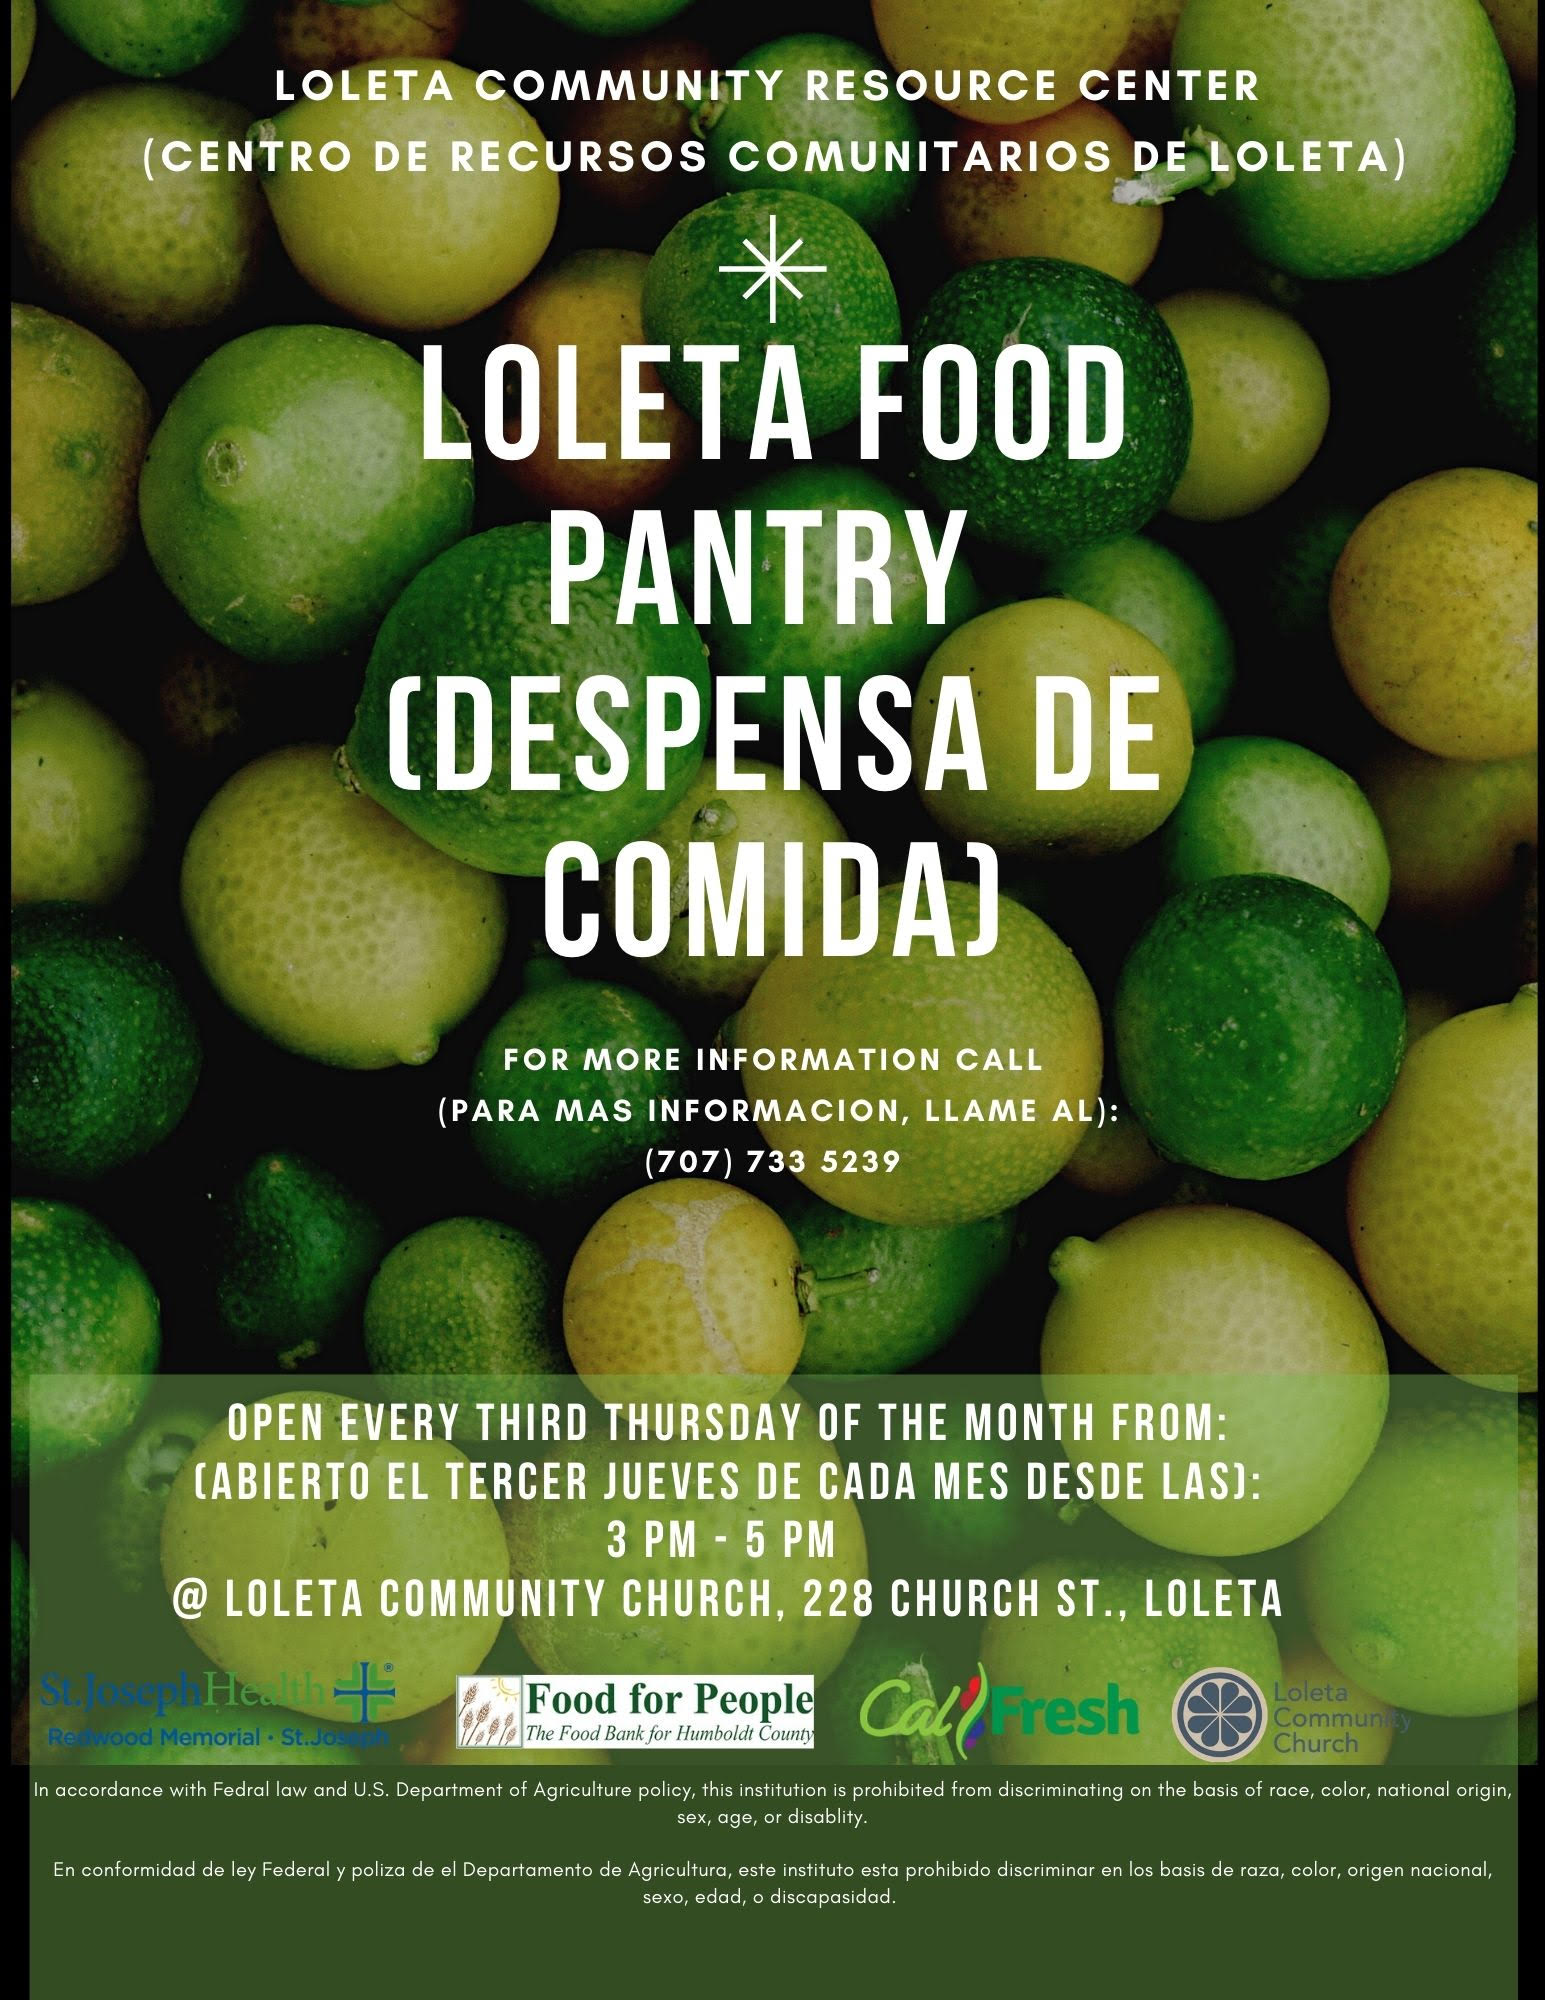 Loleta Food Pantry Call 707 733 5239 every 3rd thursday at loleta community church